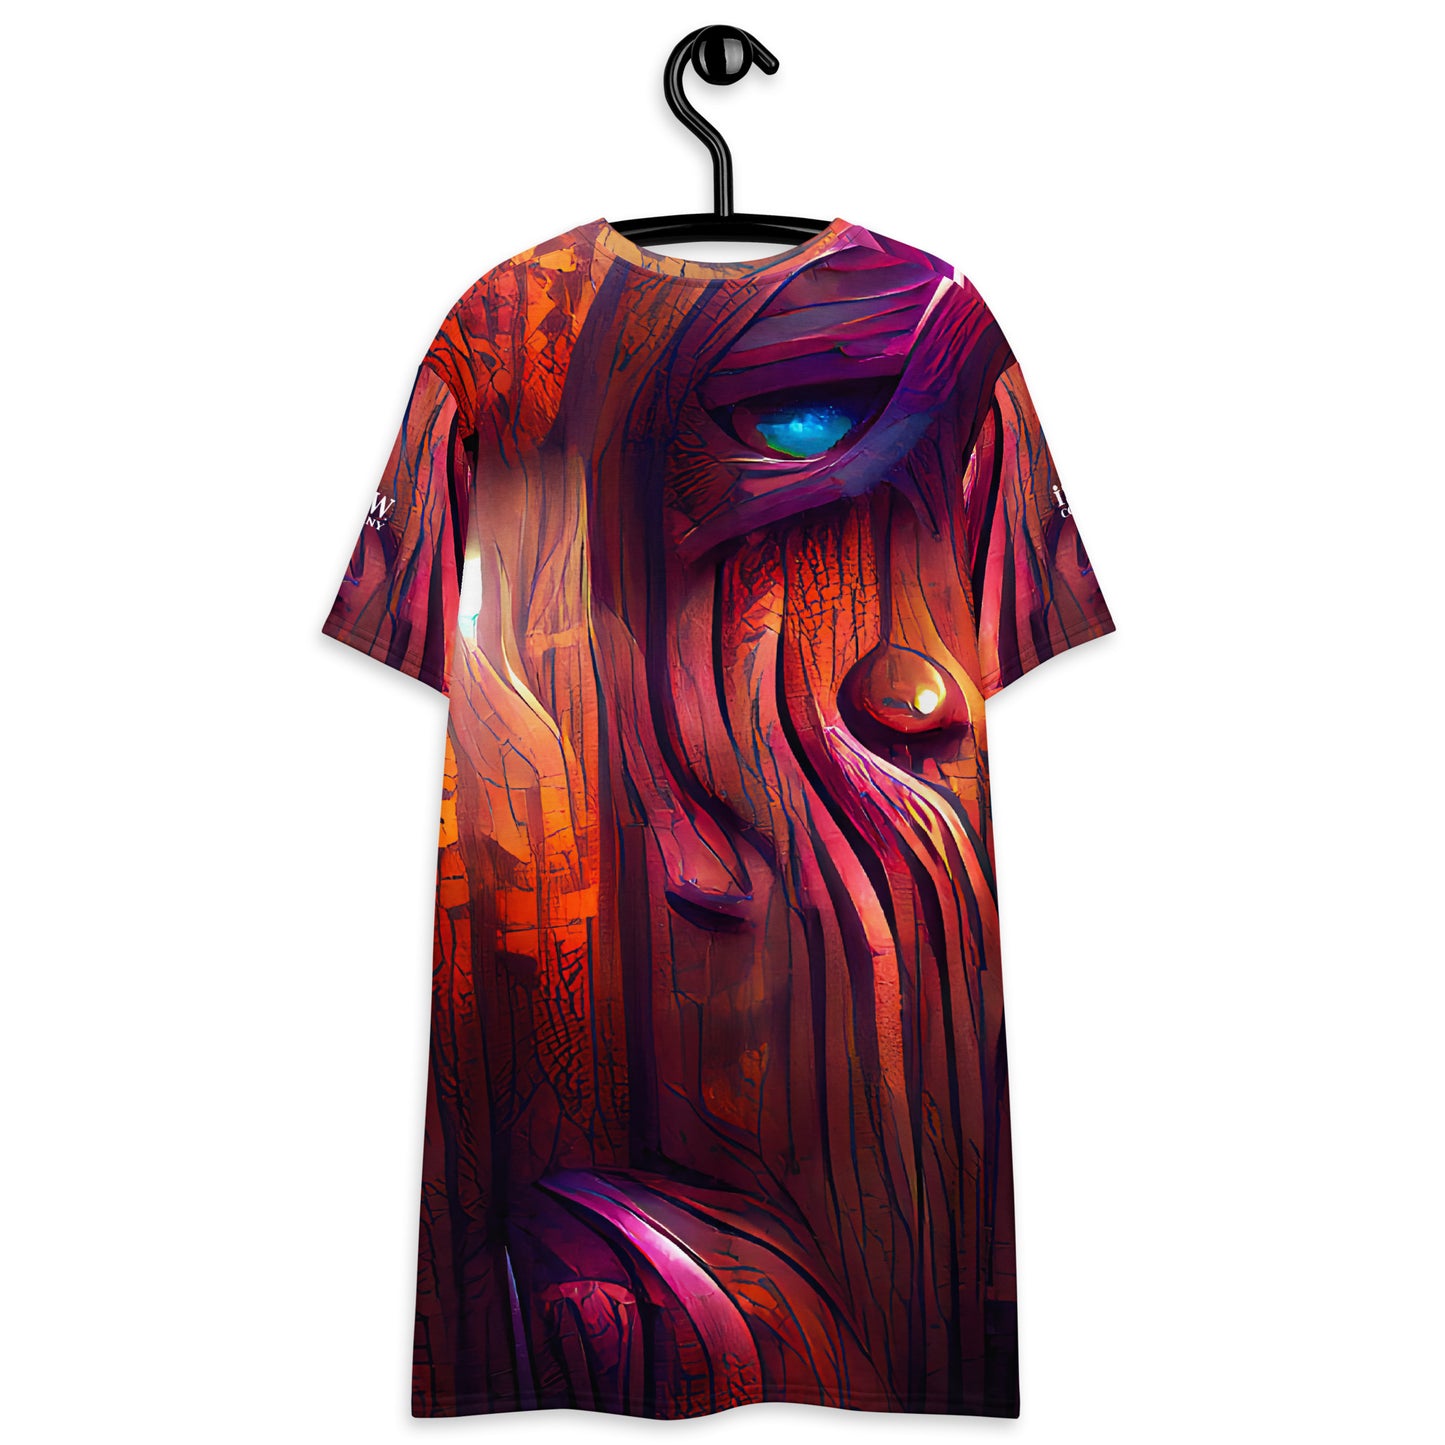 Hardwood - Womens T-Shirt Dress